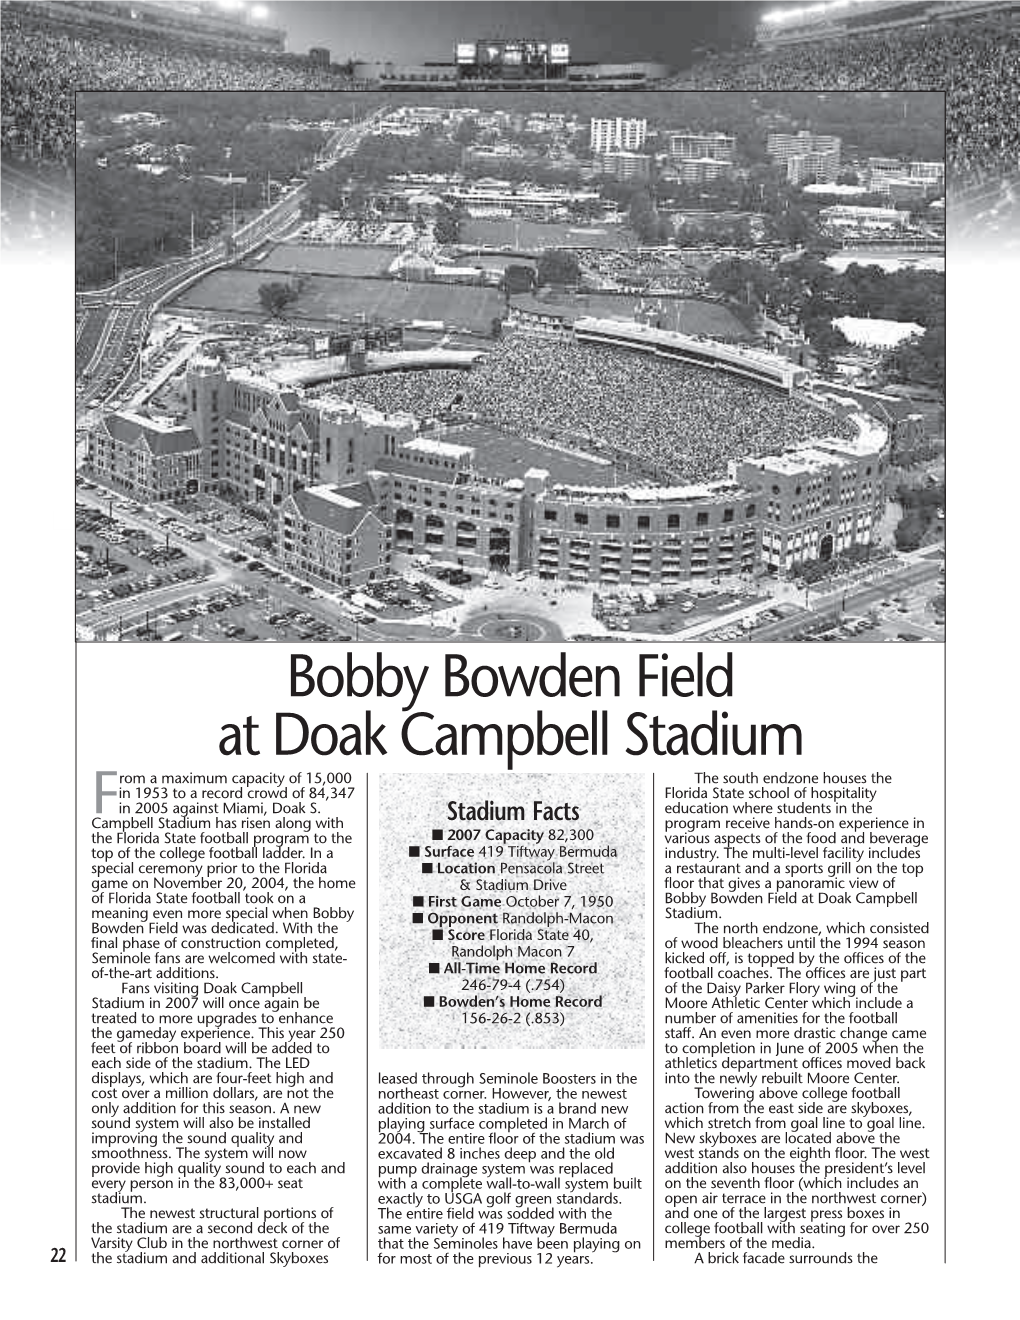 Bobby Bowden Field at Doak Campbell Stadium